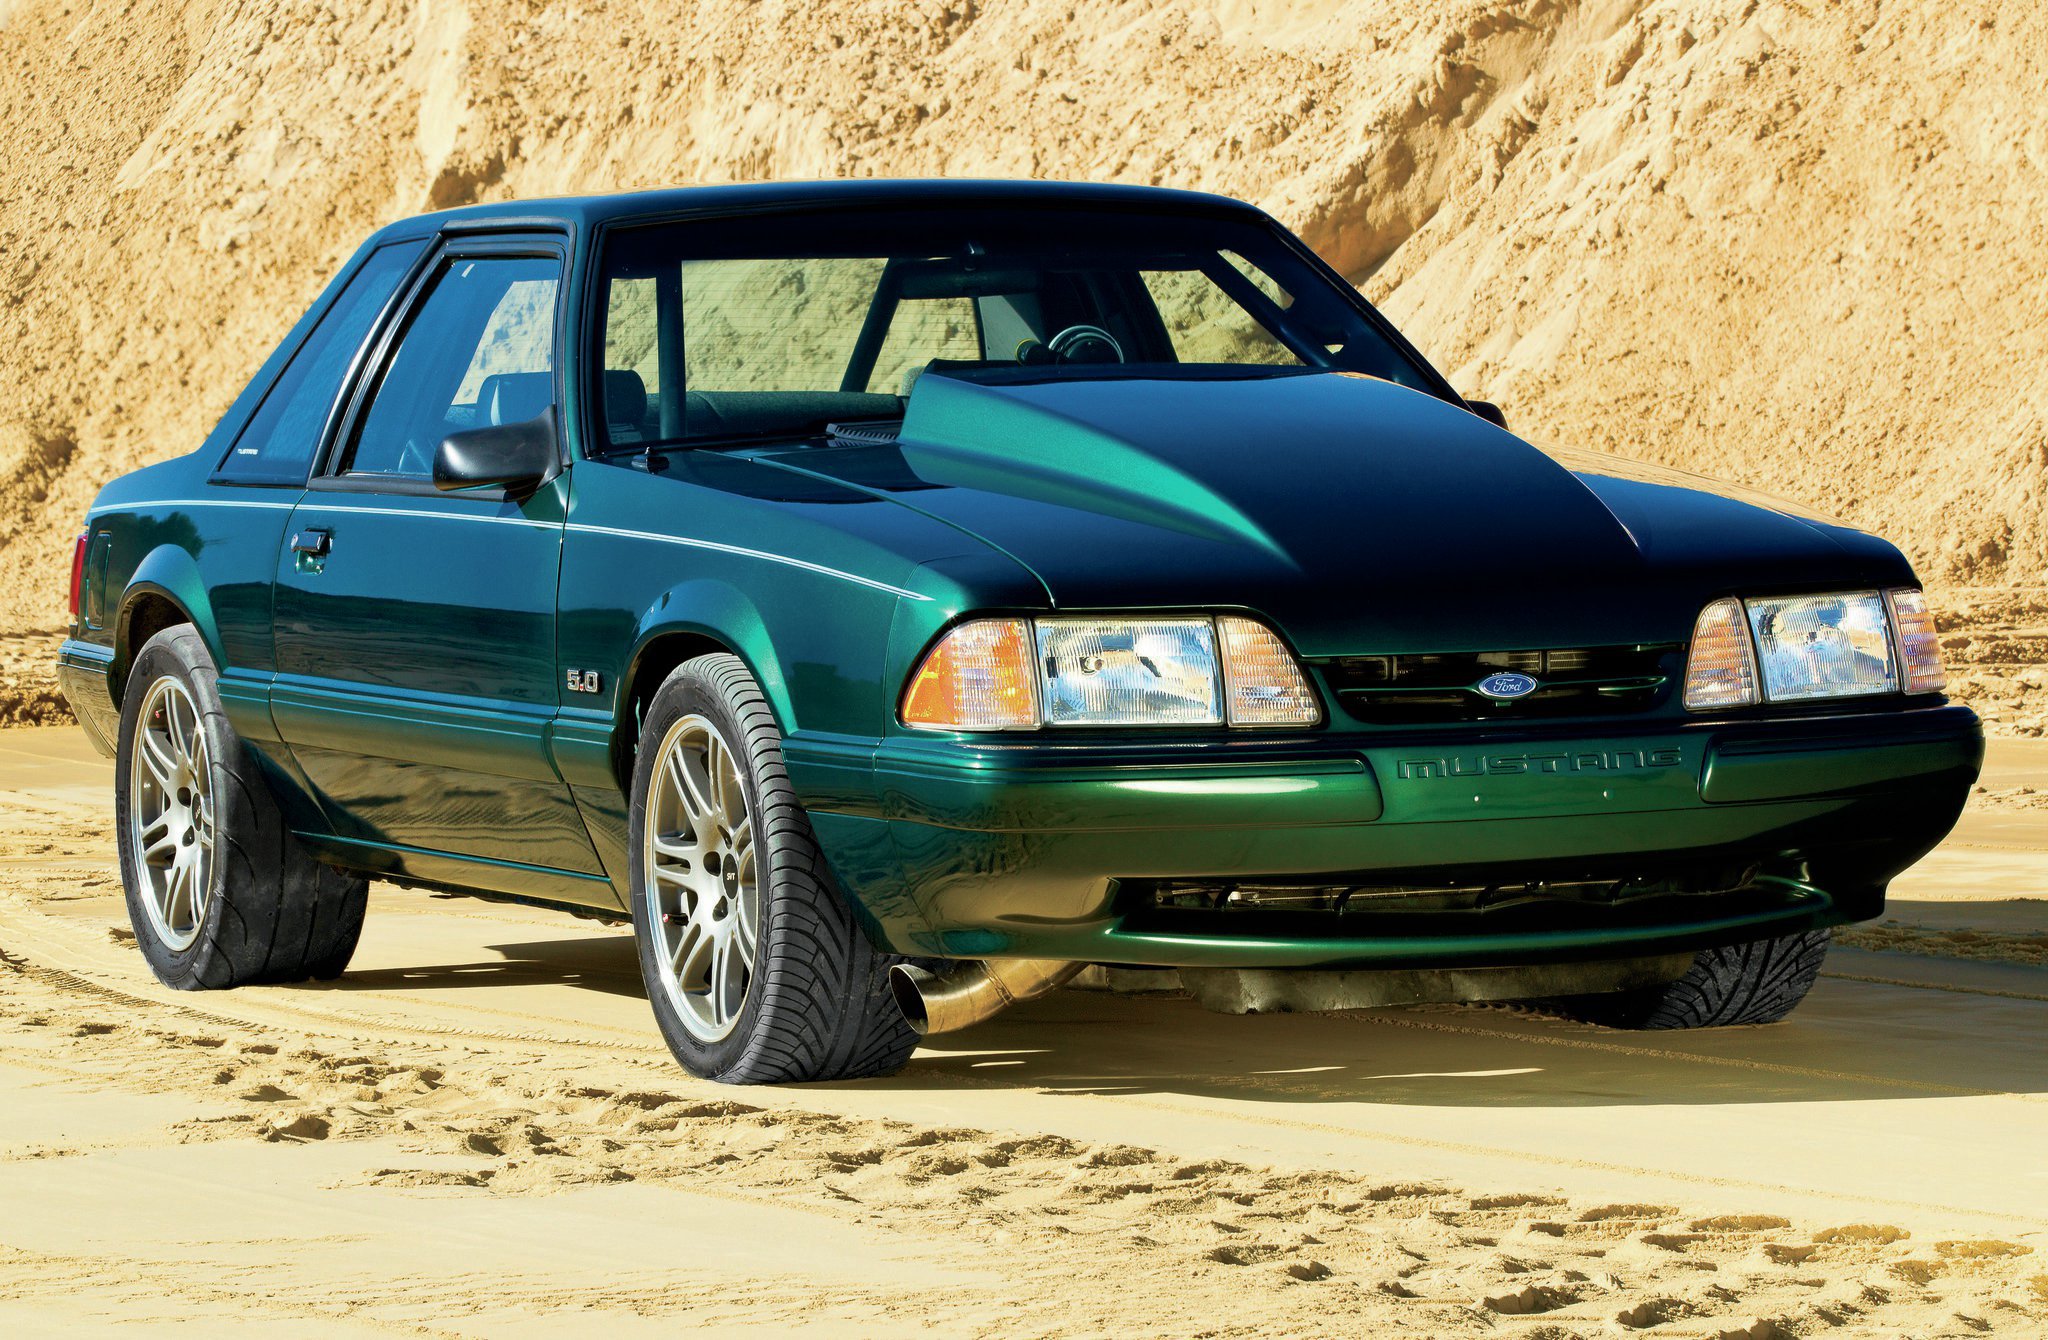 1992 Ford Mustang HD wallpapers, Desktop wallpaper - most viewed